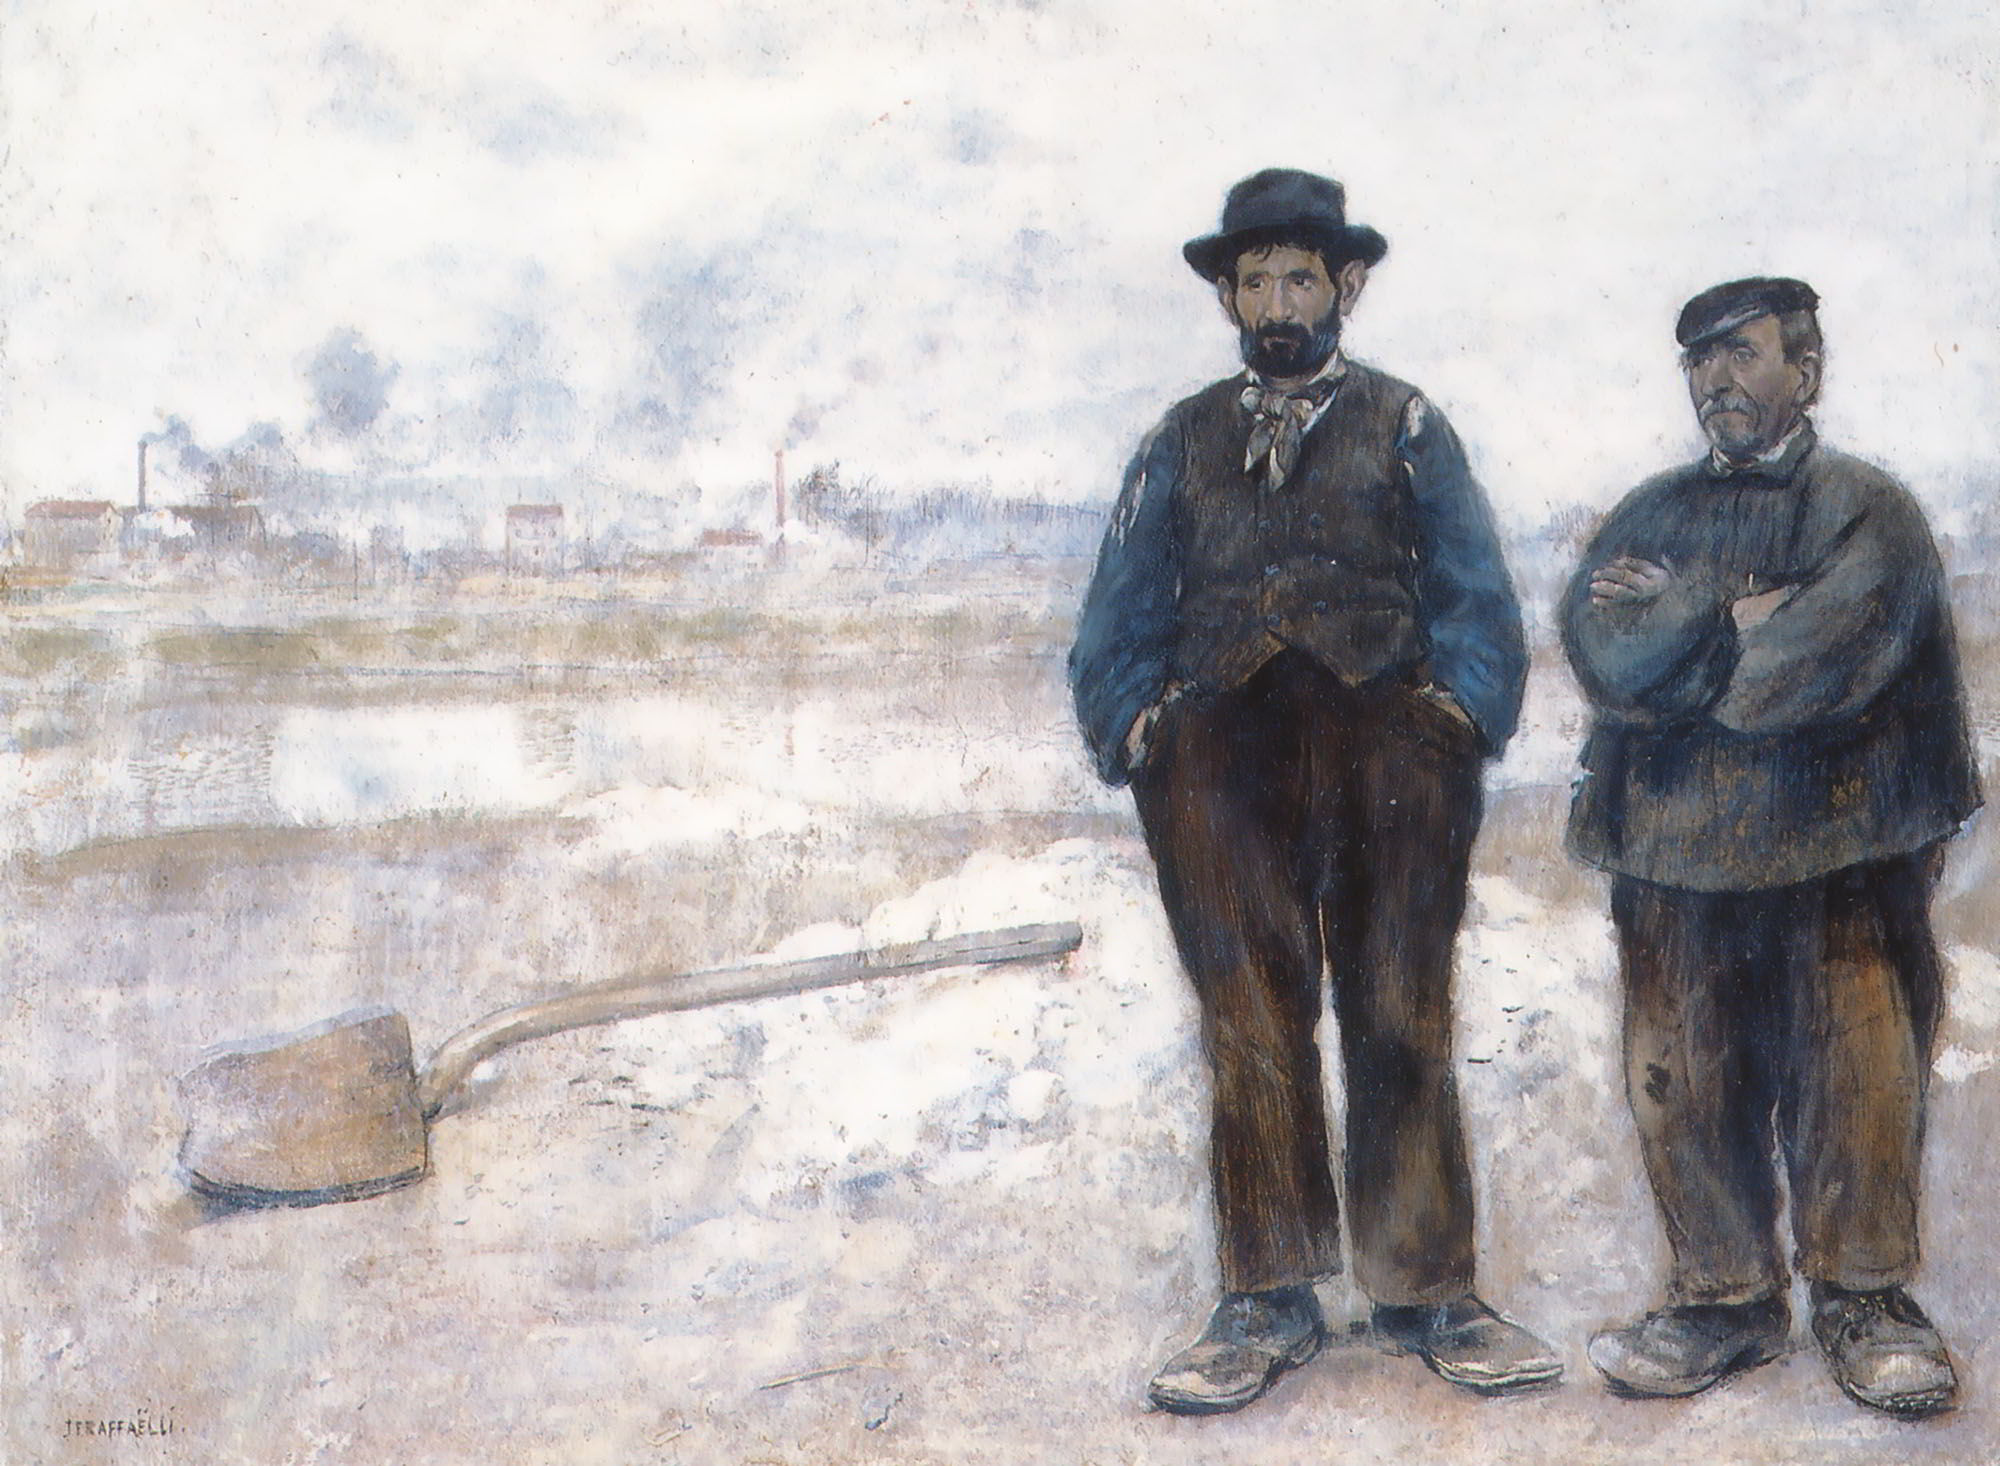 The Two Workmen by Jean Francois Raffaelli